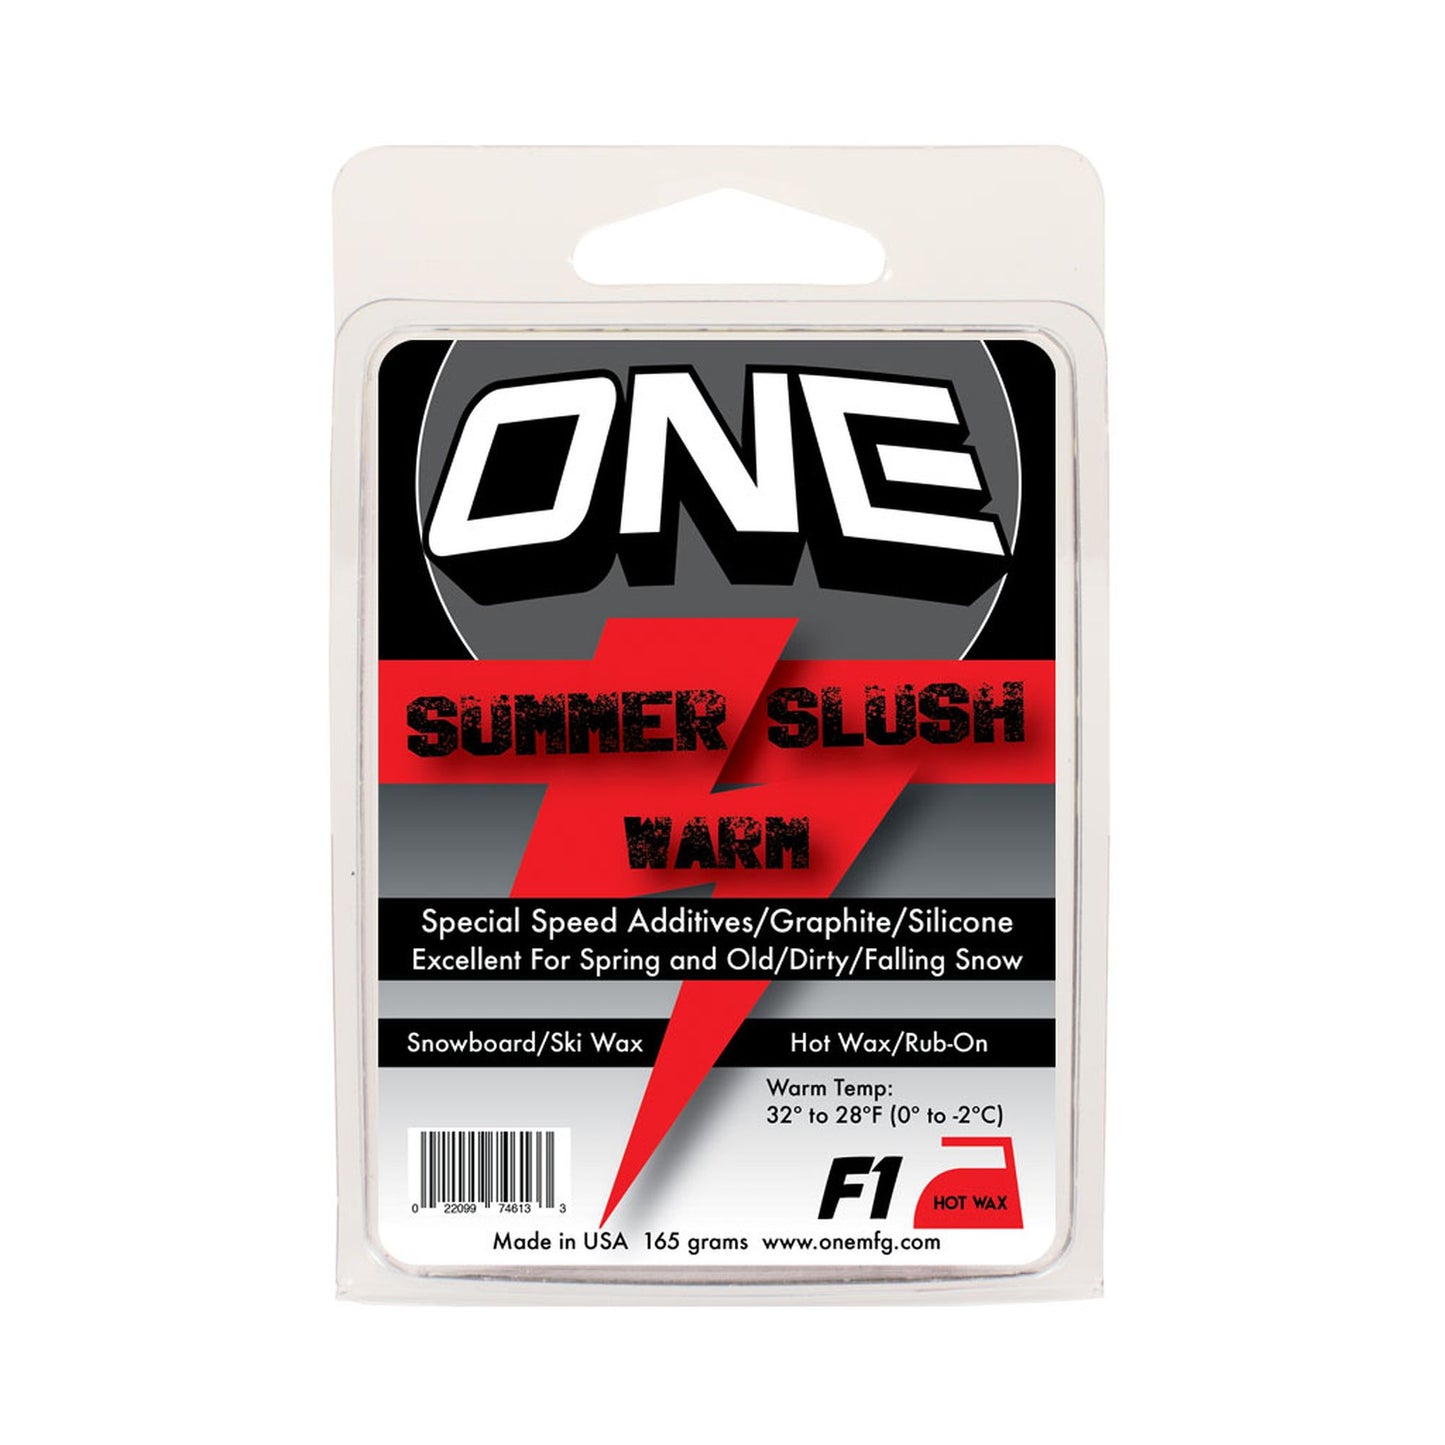 Oneball F-1 Summer Slush Snow Wax One Color OS Wax